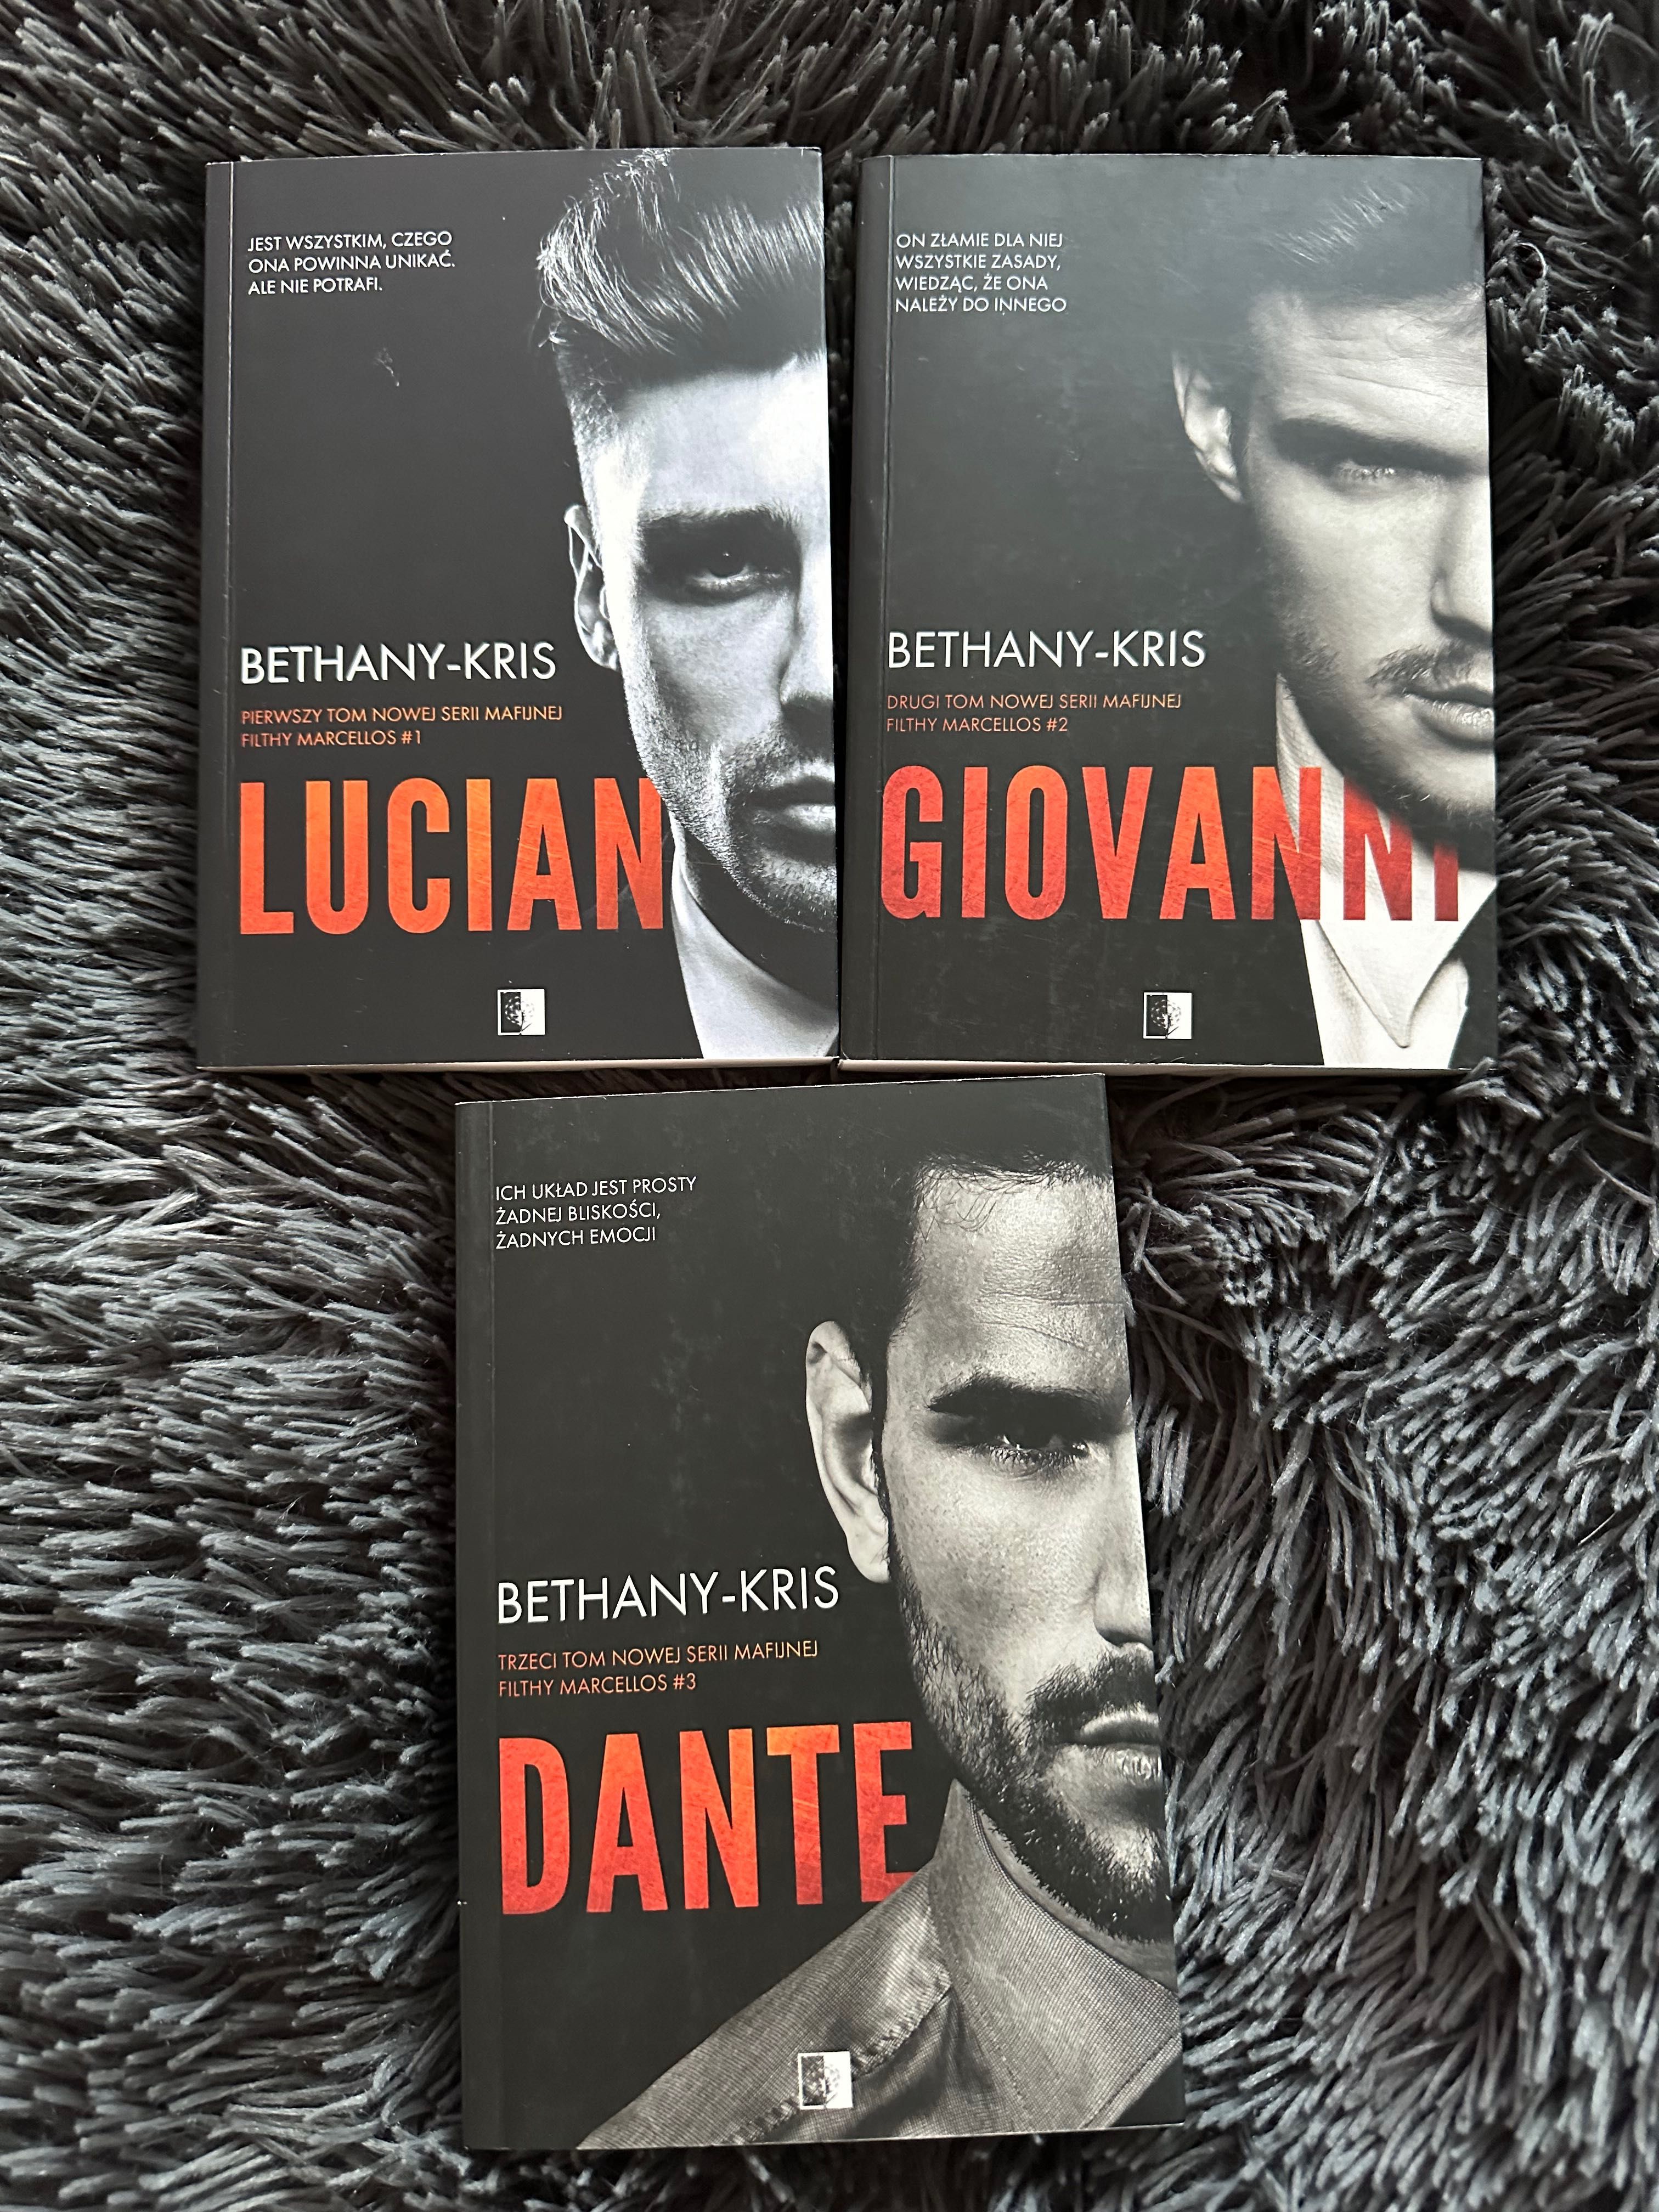 Bethany-Kris - Lucian, Giovanni, Dante